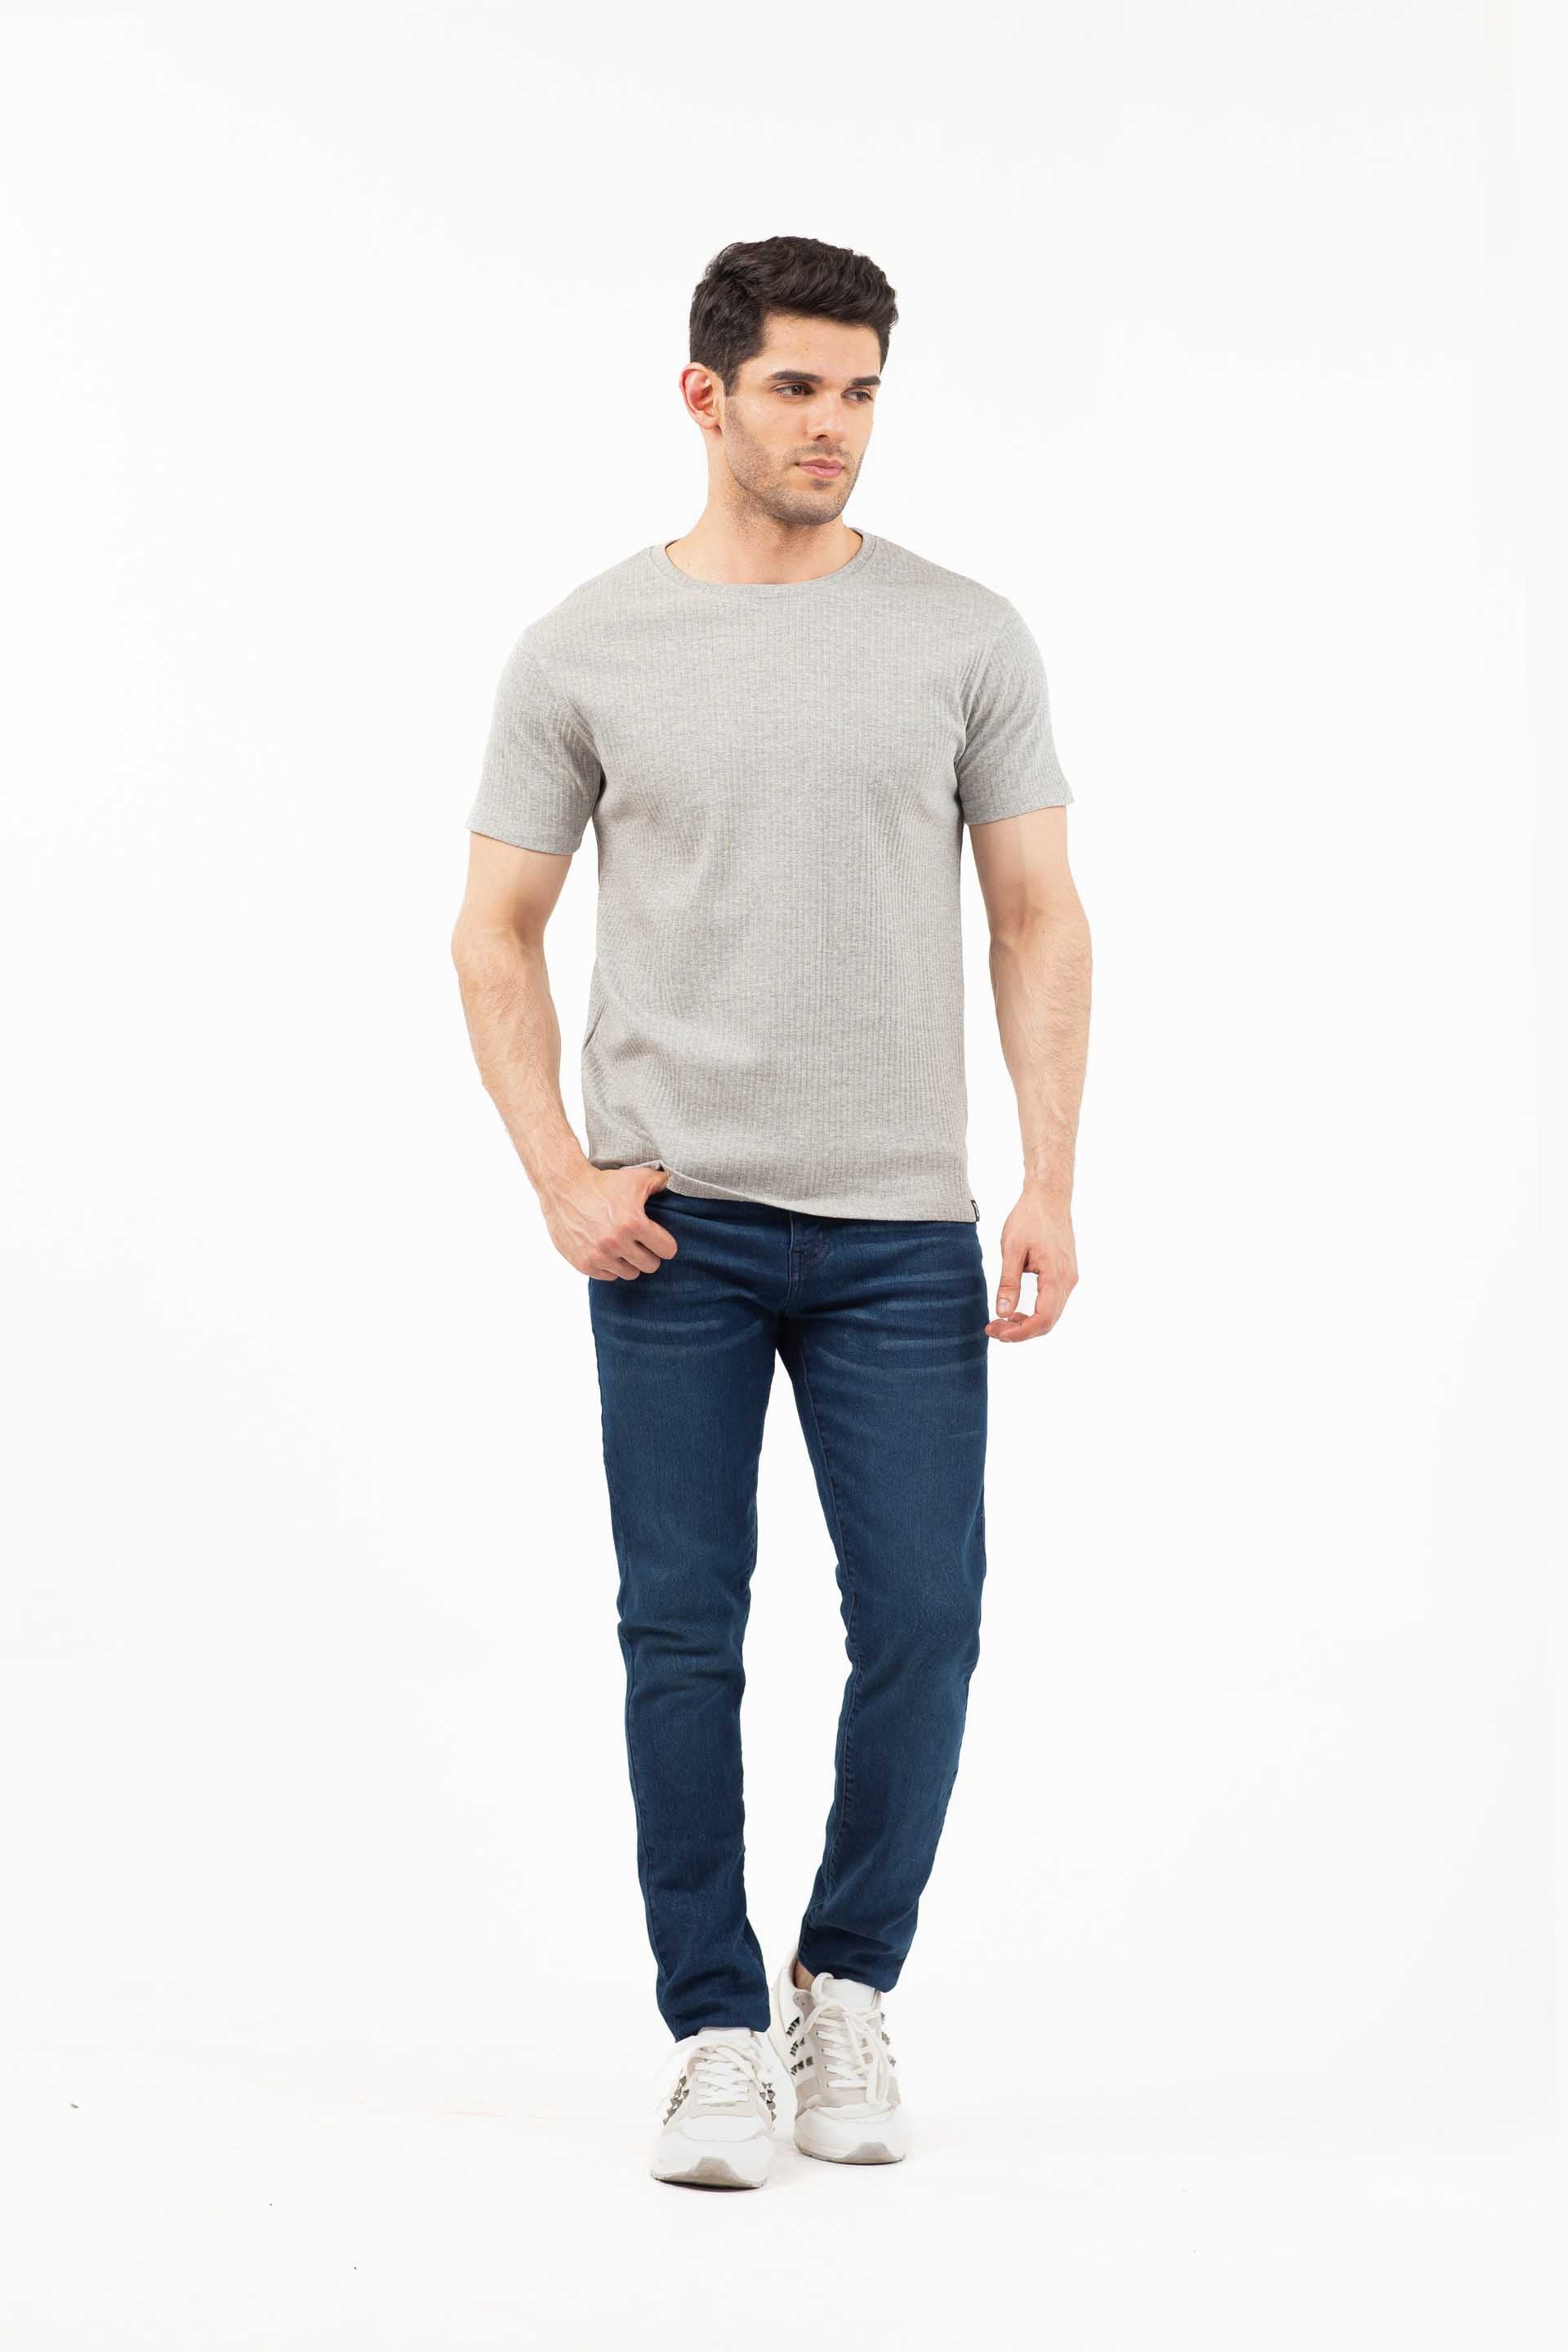 ONE Stylish Jeans for Men | Buy Best Jeans for Men Online